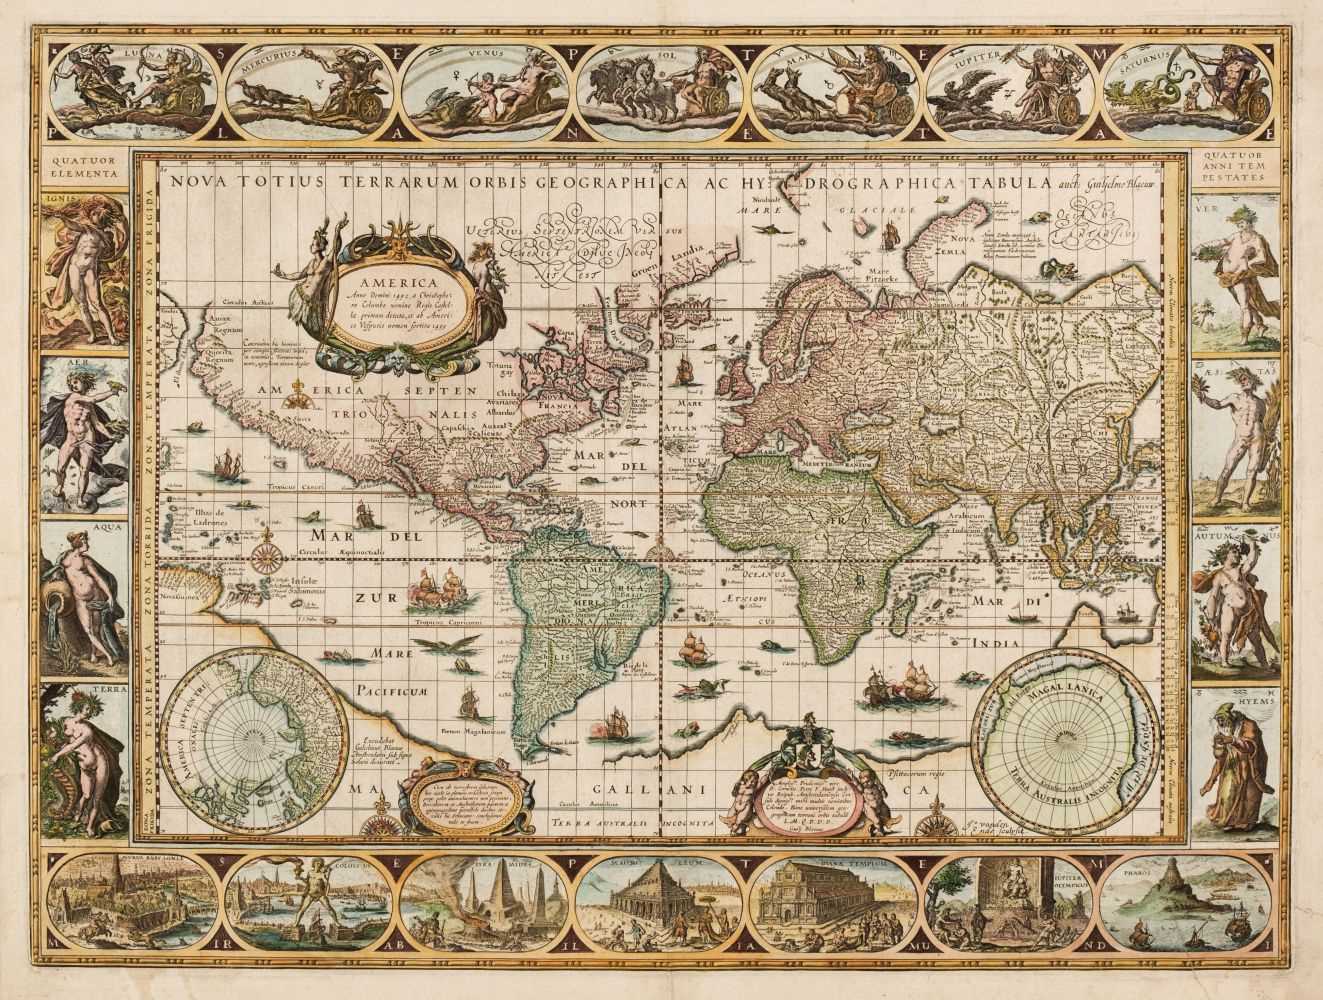 Lot 202 - World. Blaeu (Willem), Nova Totius Terrarum Orbis Geographica ac Hydrographica Tabula, circa 1630